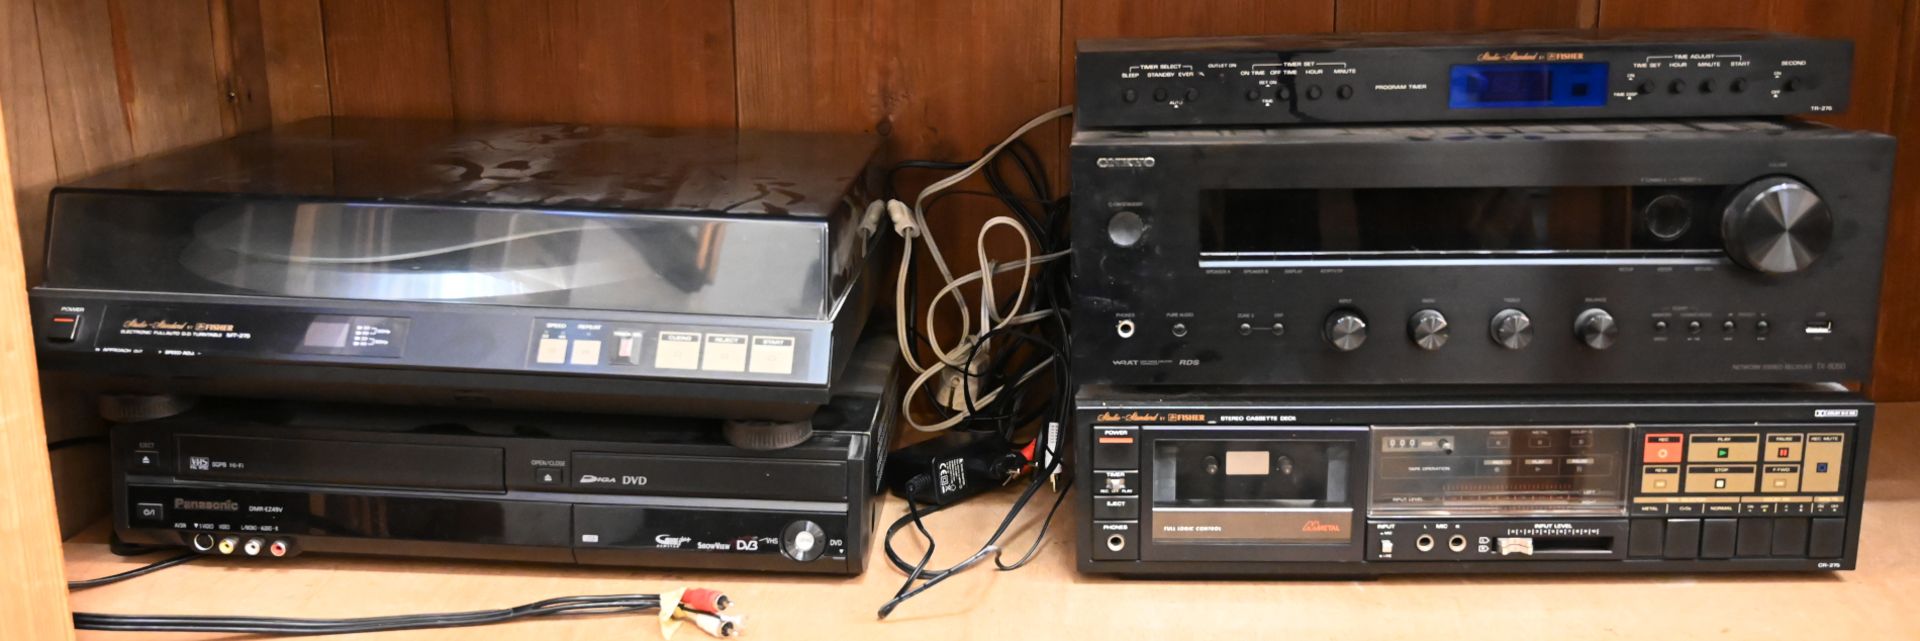 1 Stereoanlage FISHER "Studio-Standard" wohl um 1980 mit Compact Disc Player, Graphic Equalizer, Pla - Bild 2 aus 3